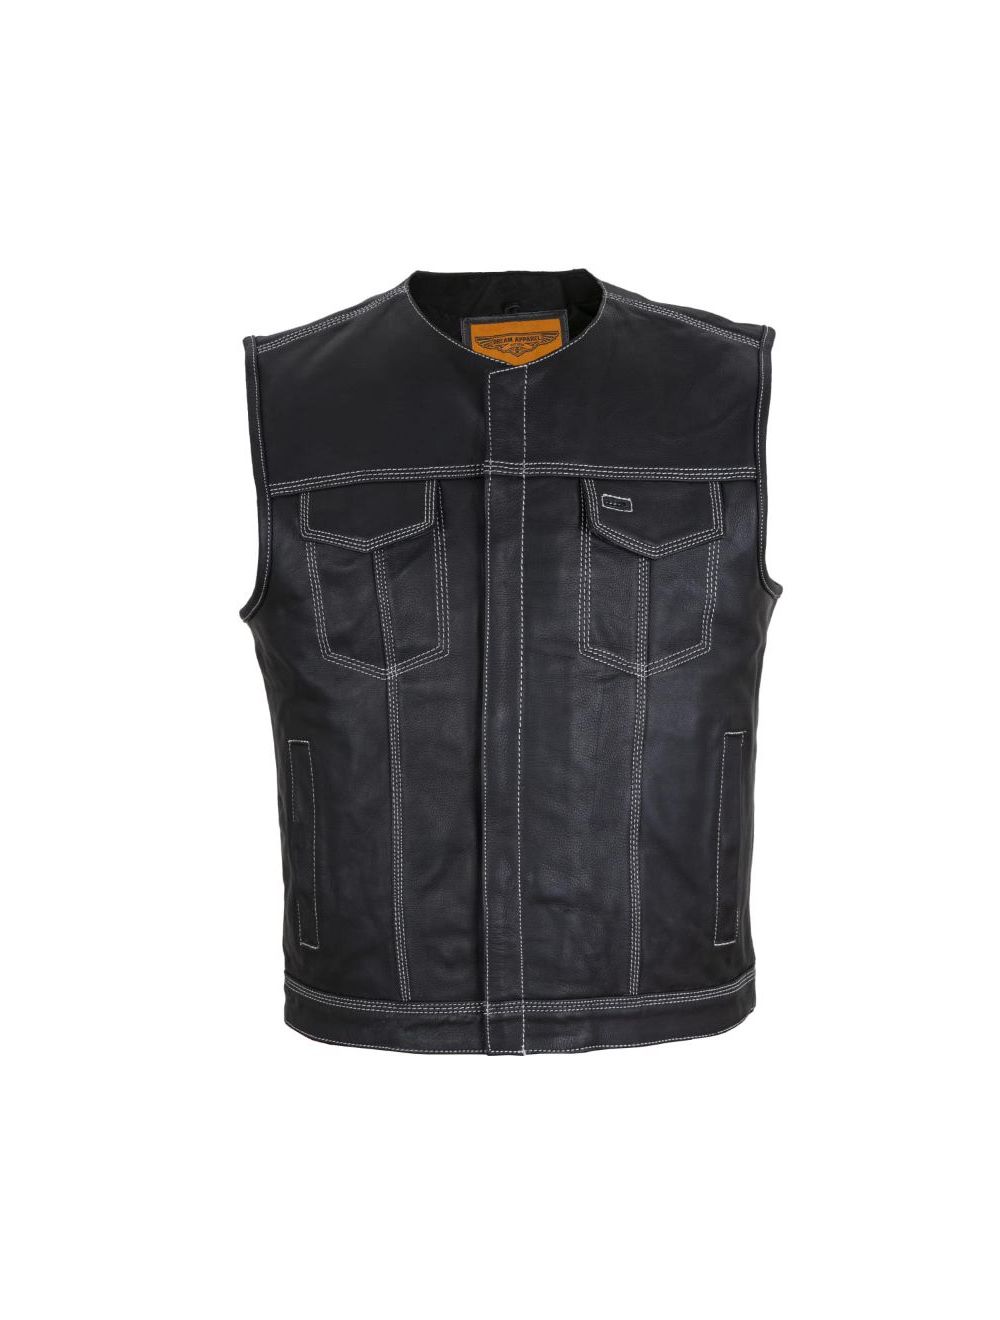 Men's Leather Motorcycle Club Vest